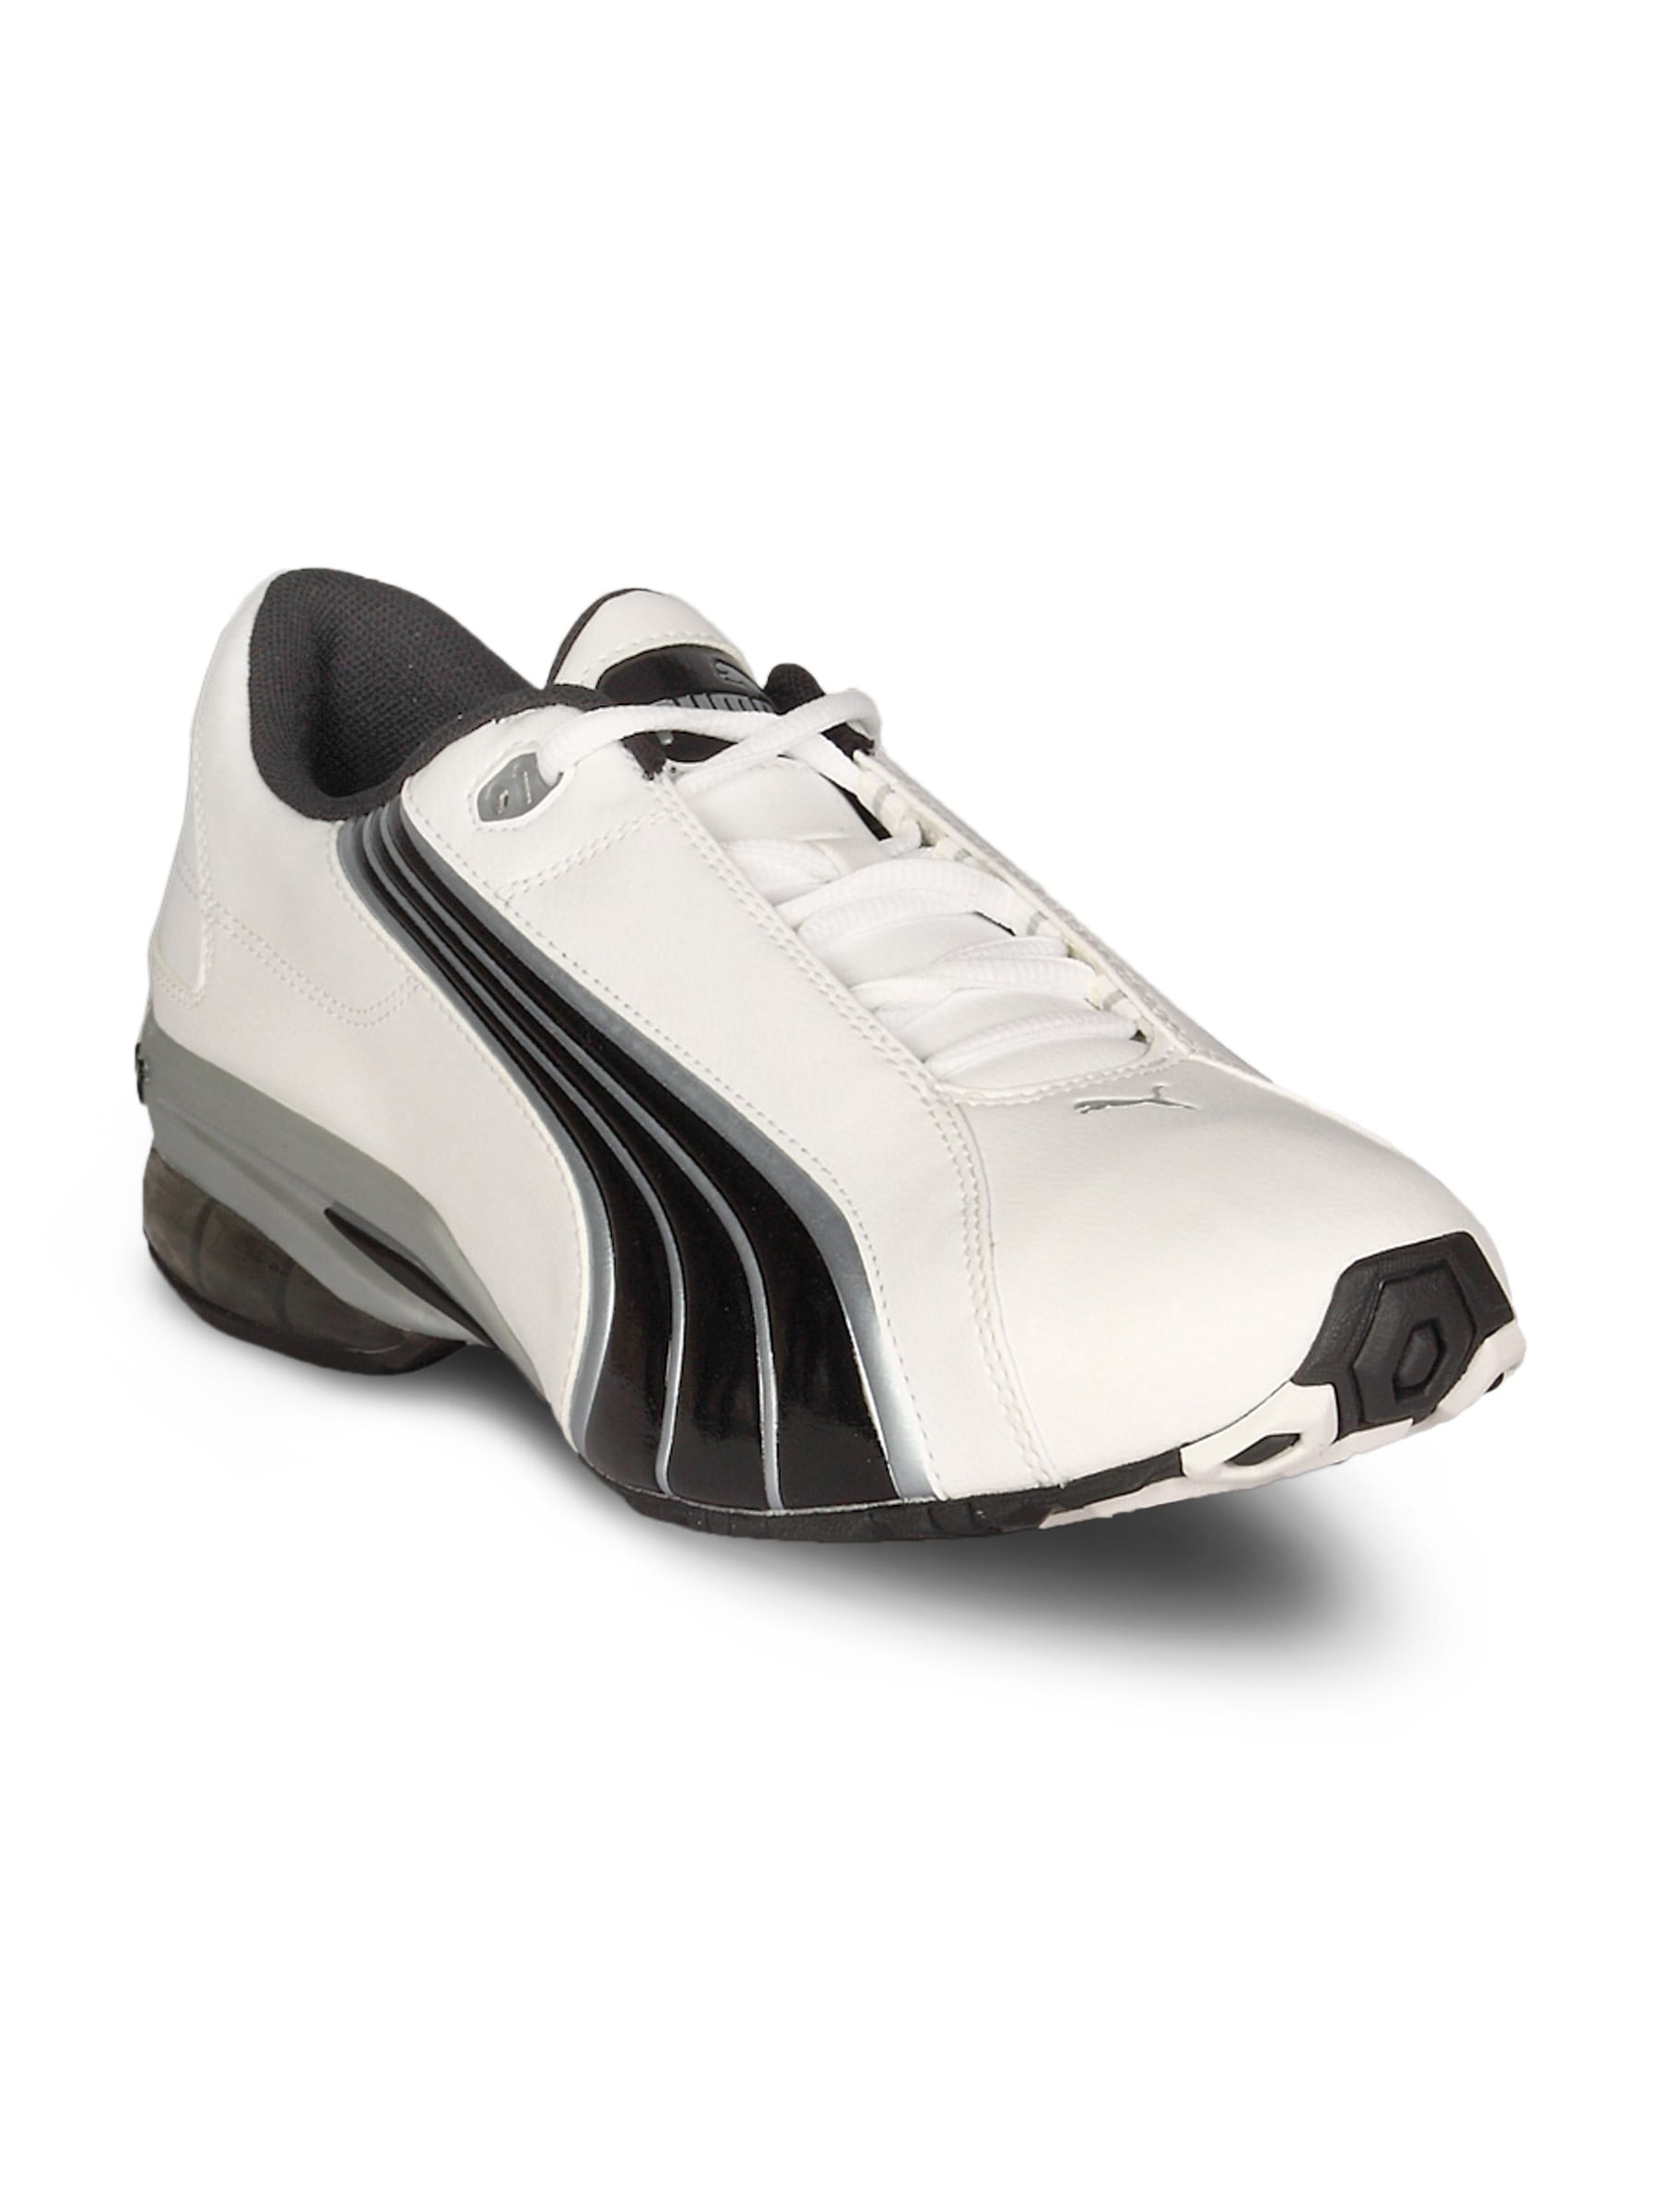 Puma Men's Jago White Black Silver Shoe